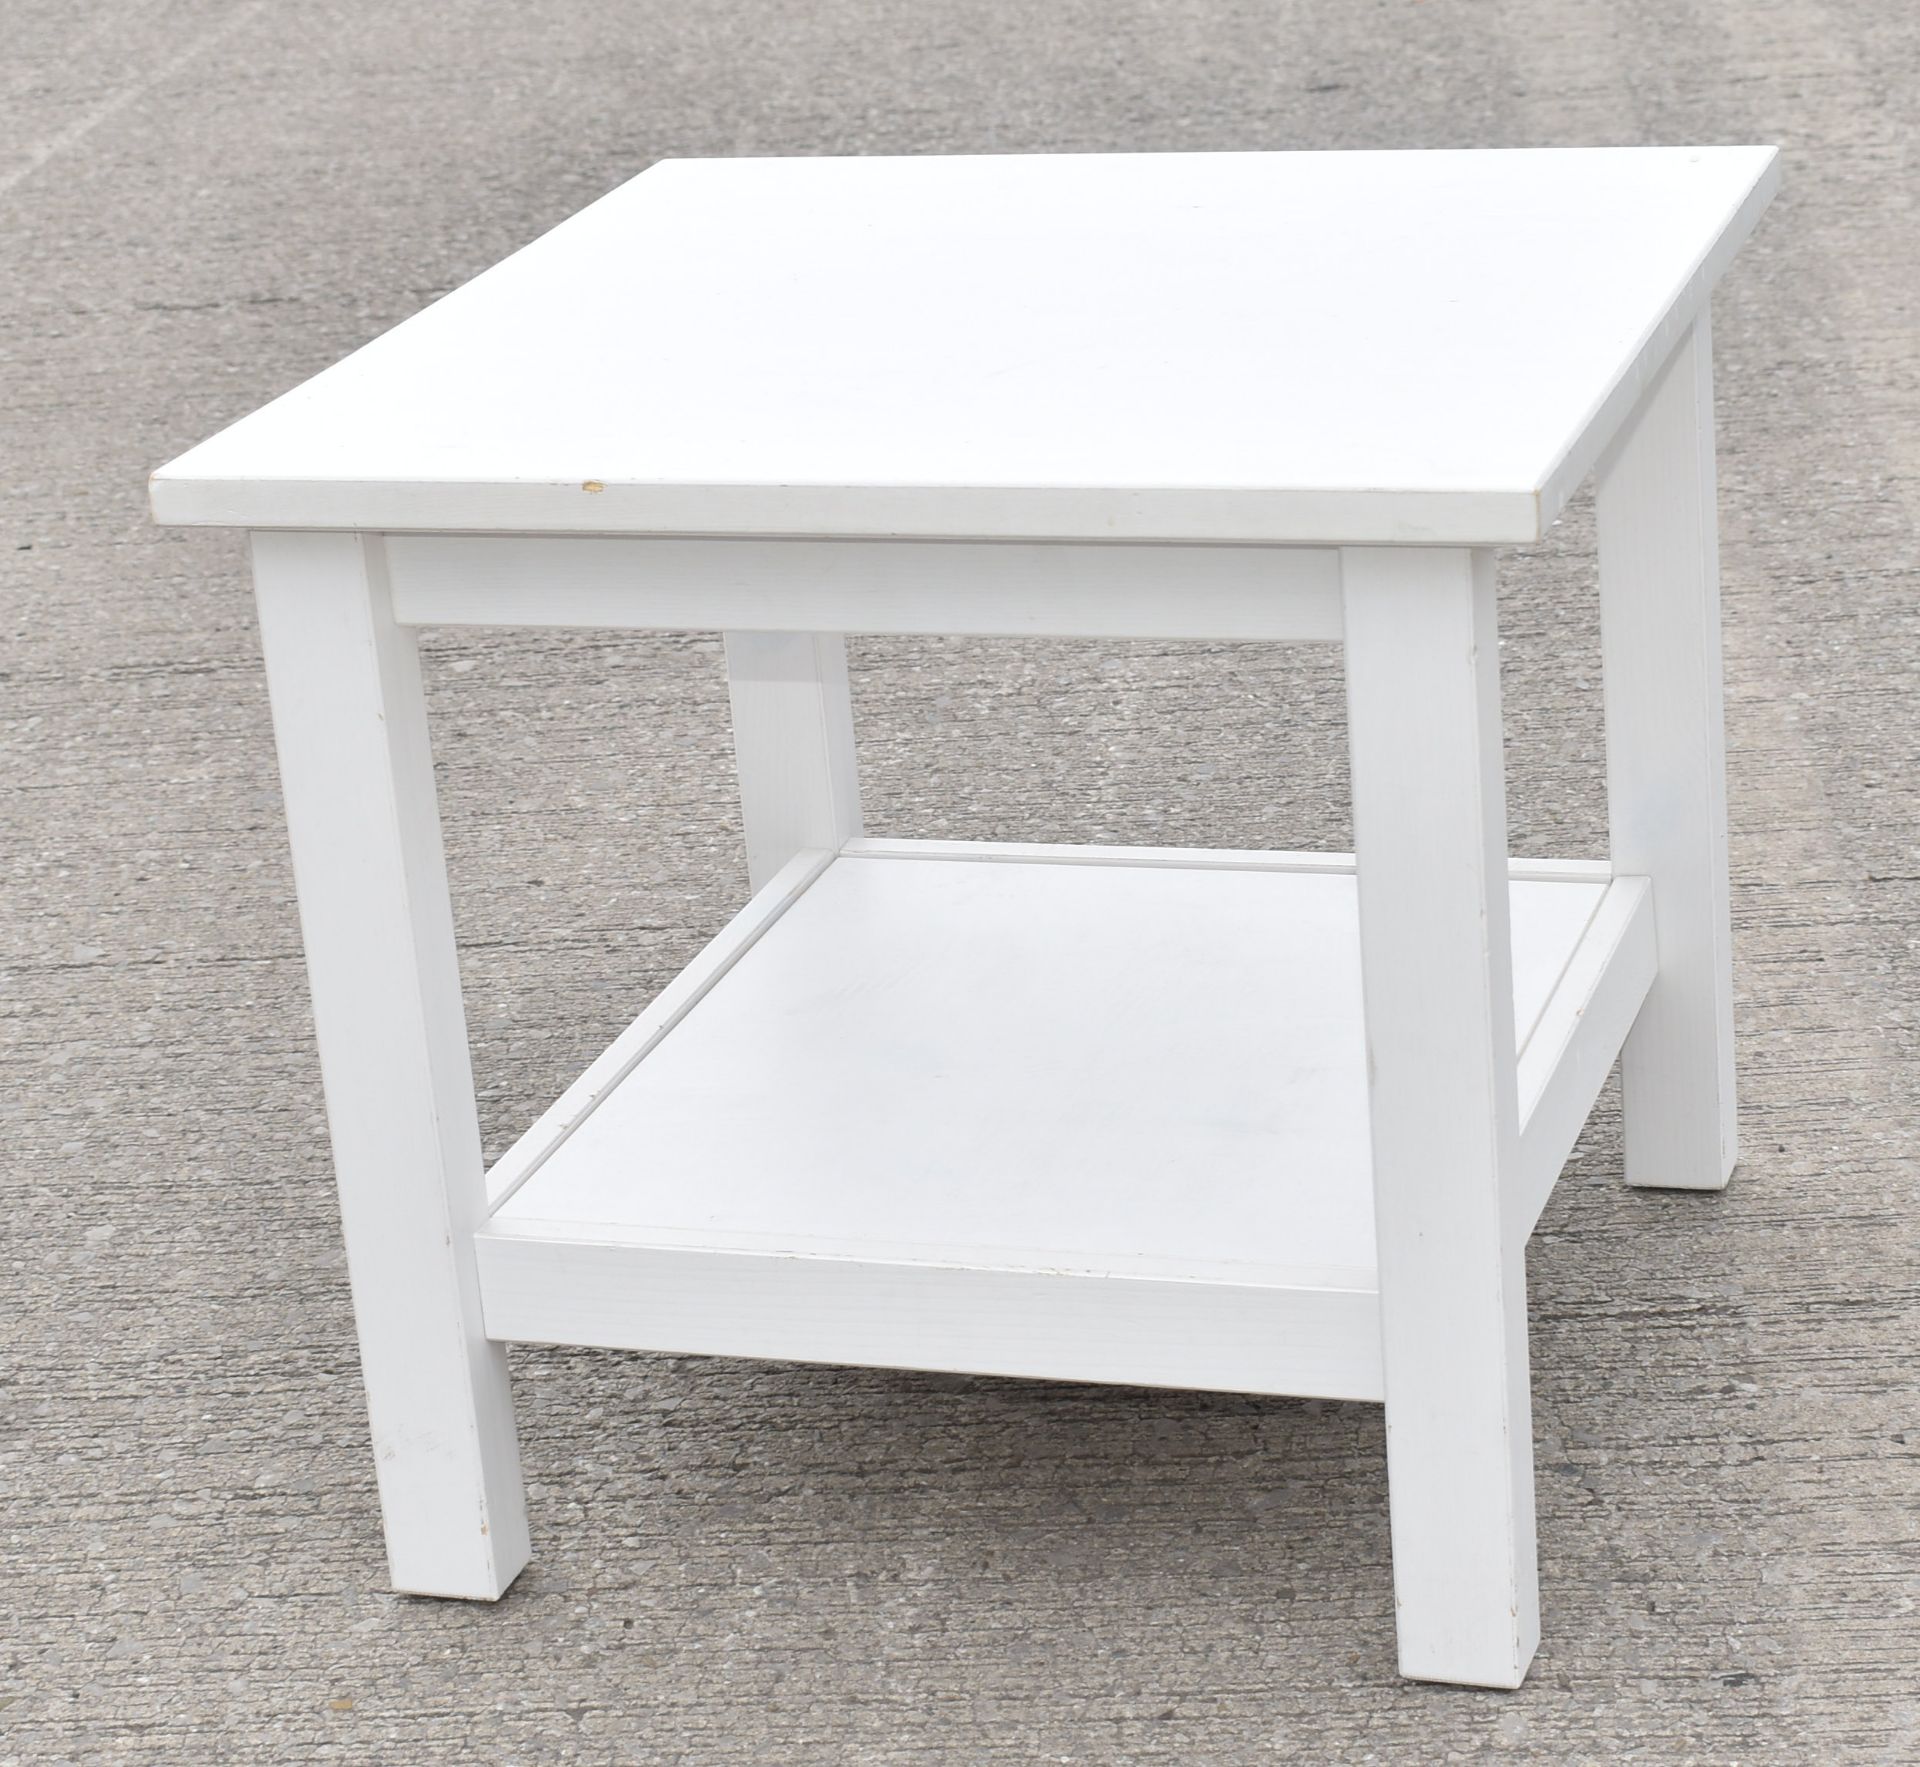 1 x White Square Wooden Table - 56x56x51cm - Ref: K289 - CL905 - Location: Altrincham WA14*Stock - Image 9 of 9